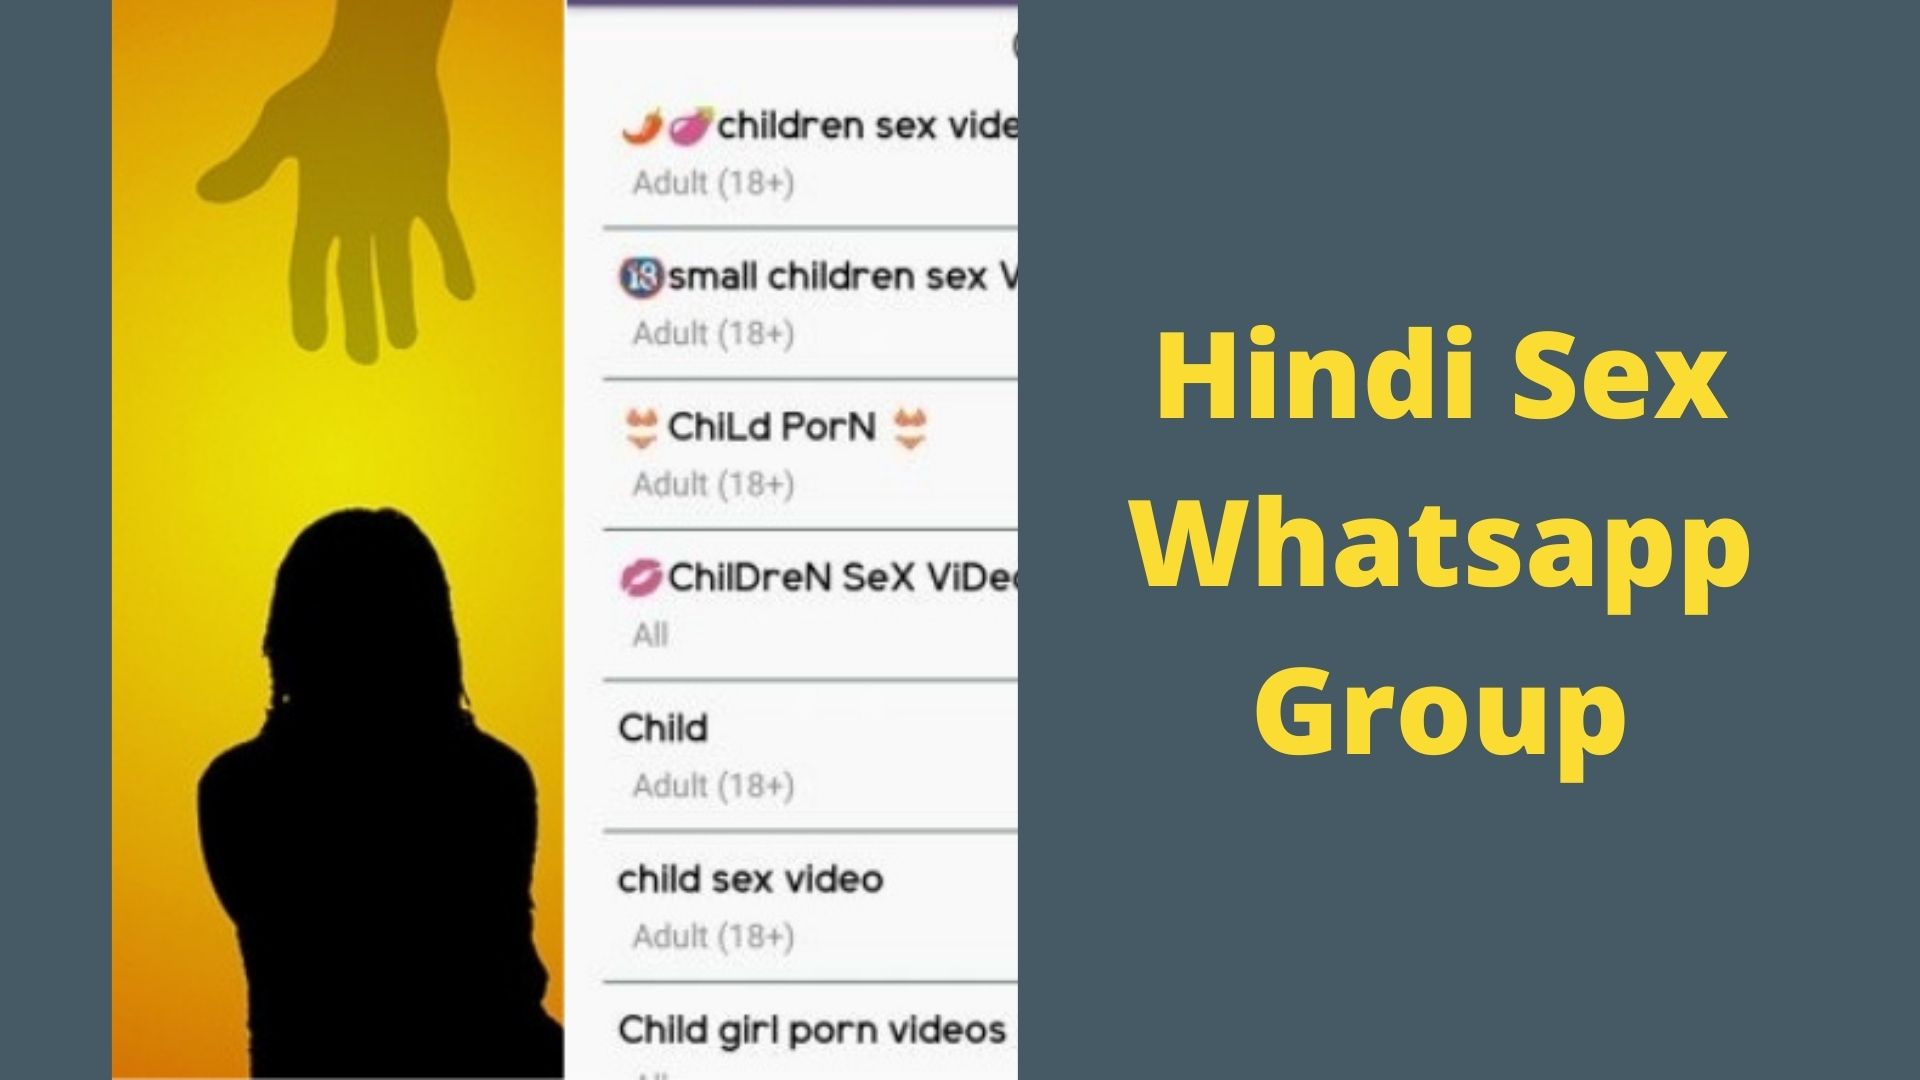 Hindi Sex Whatsapp Group